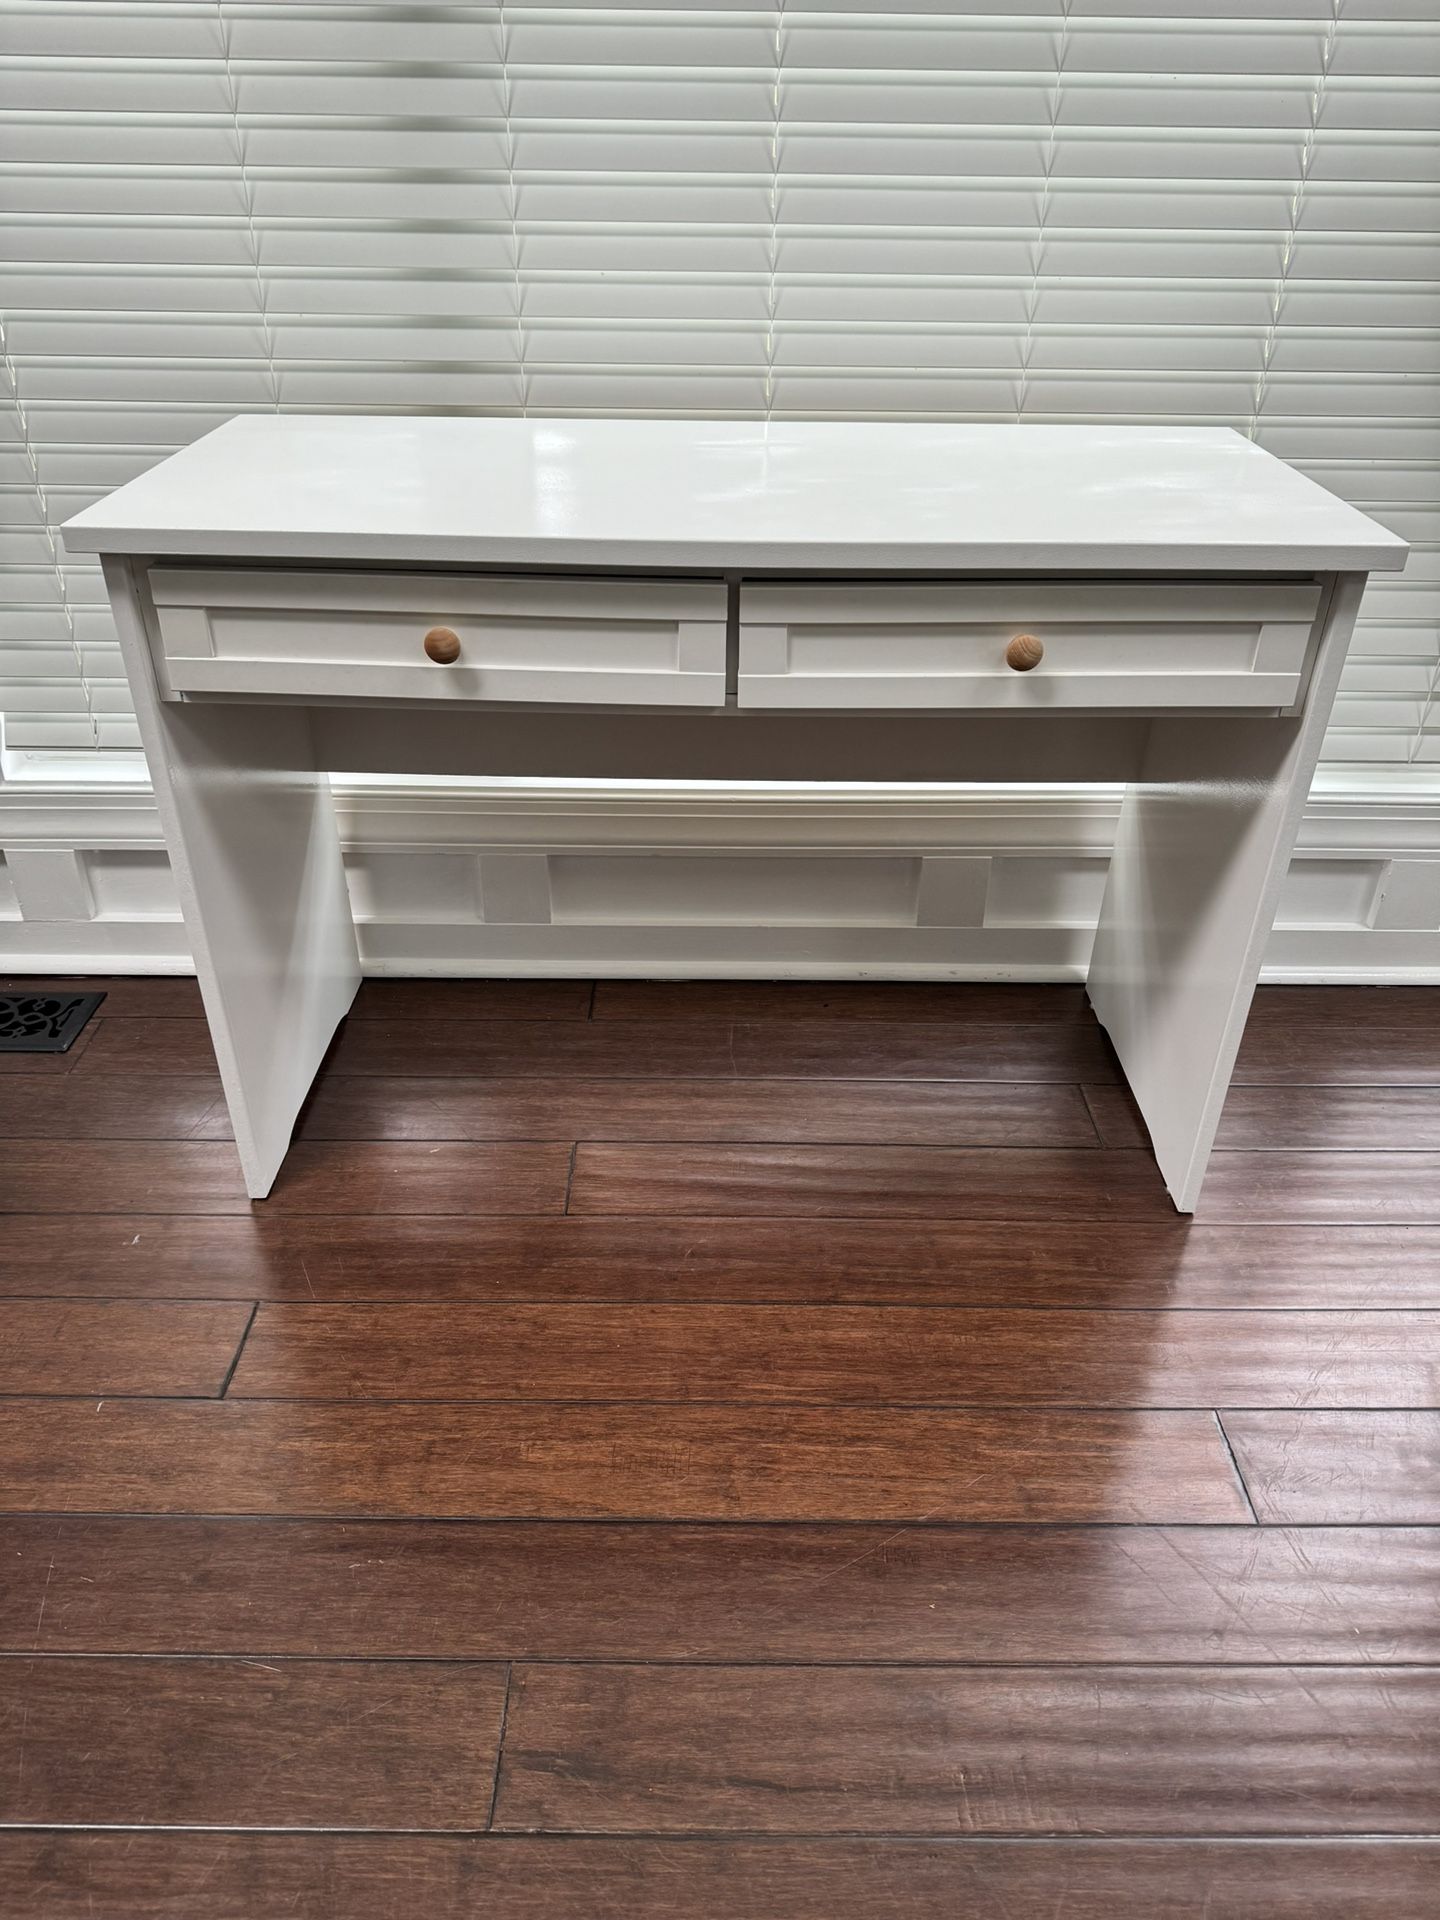 Desk / Vanity $45